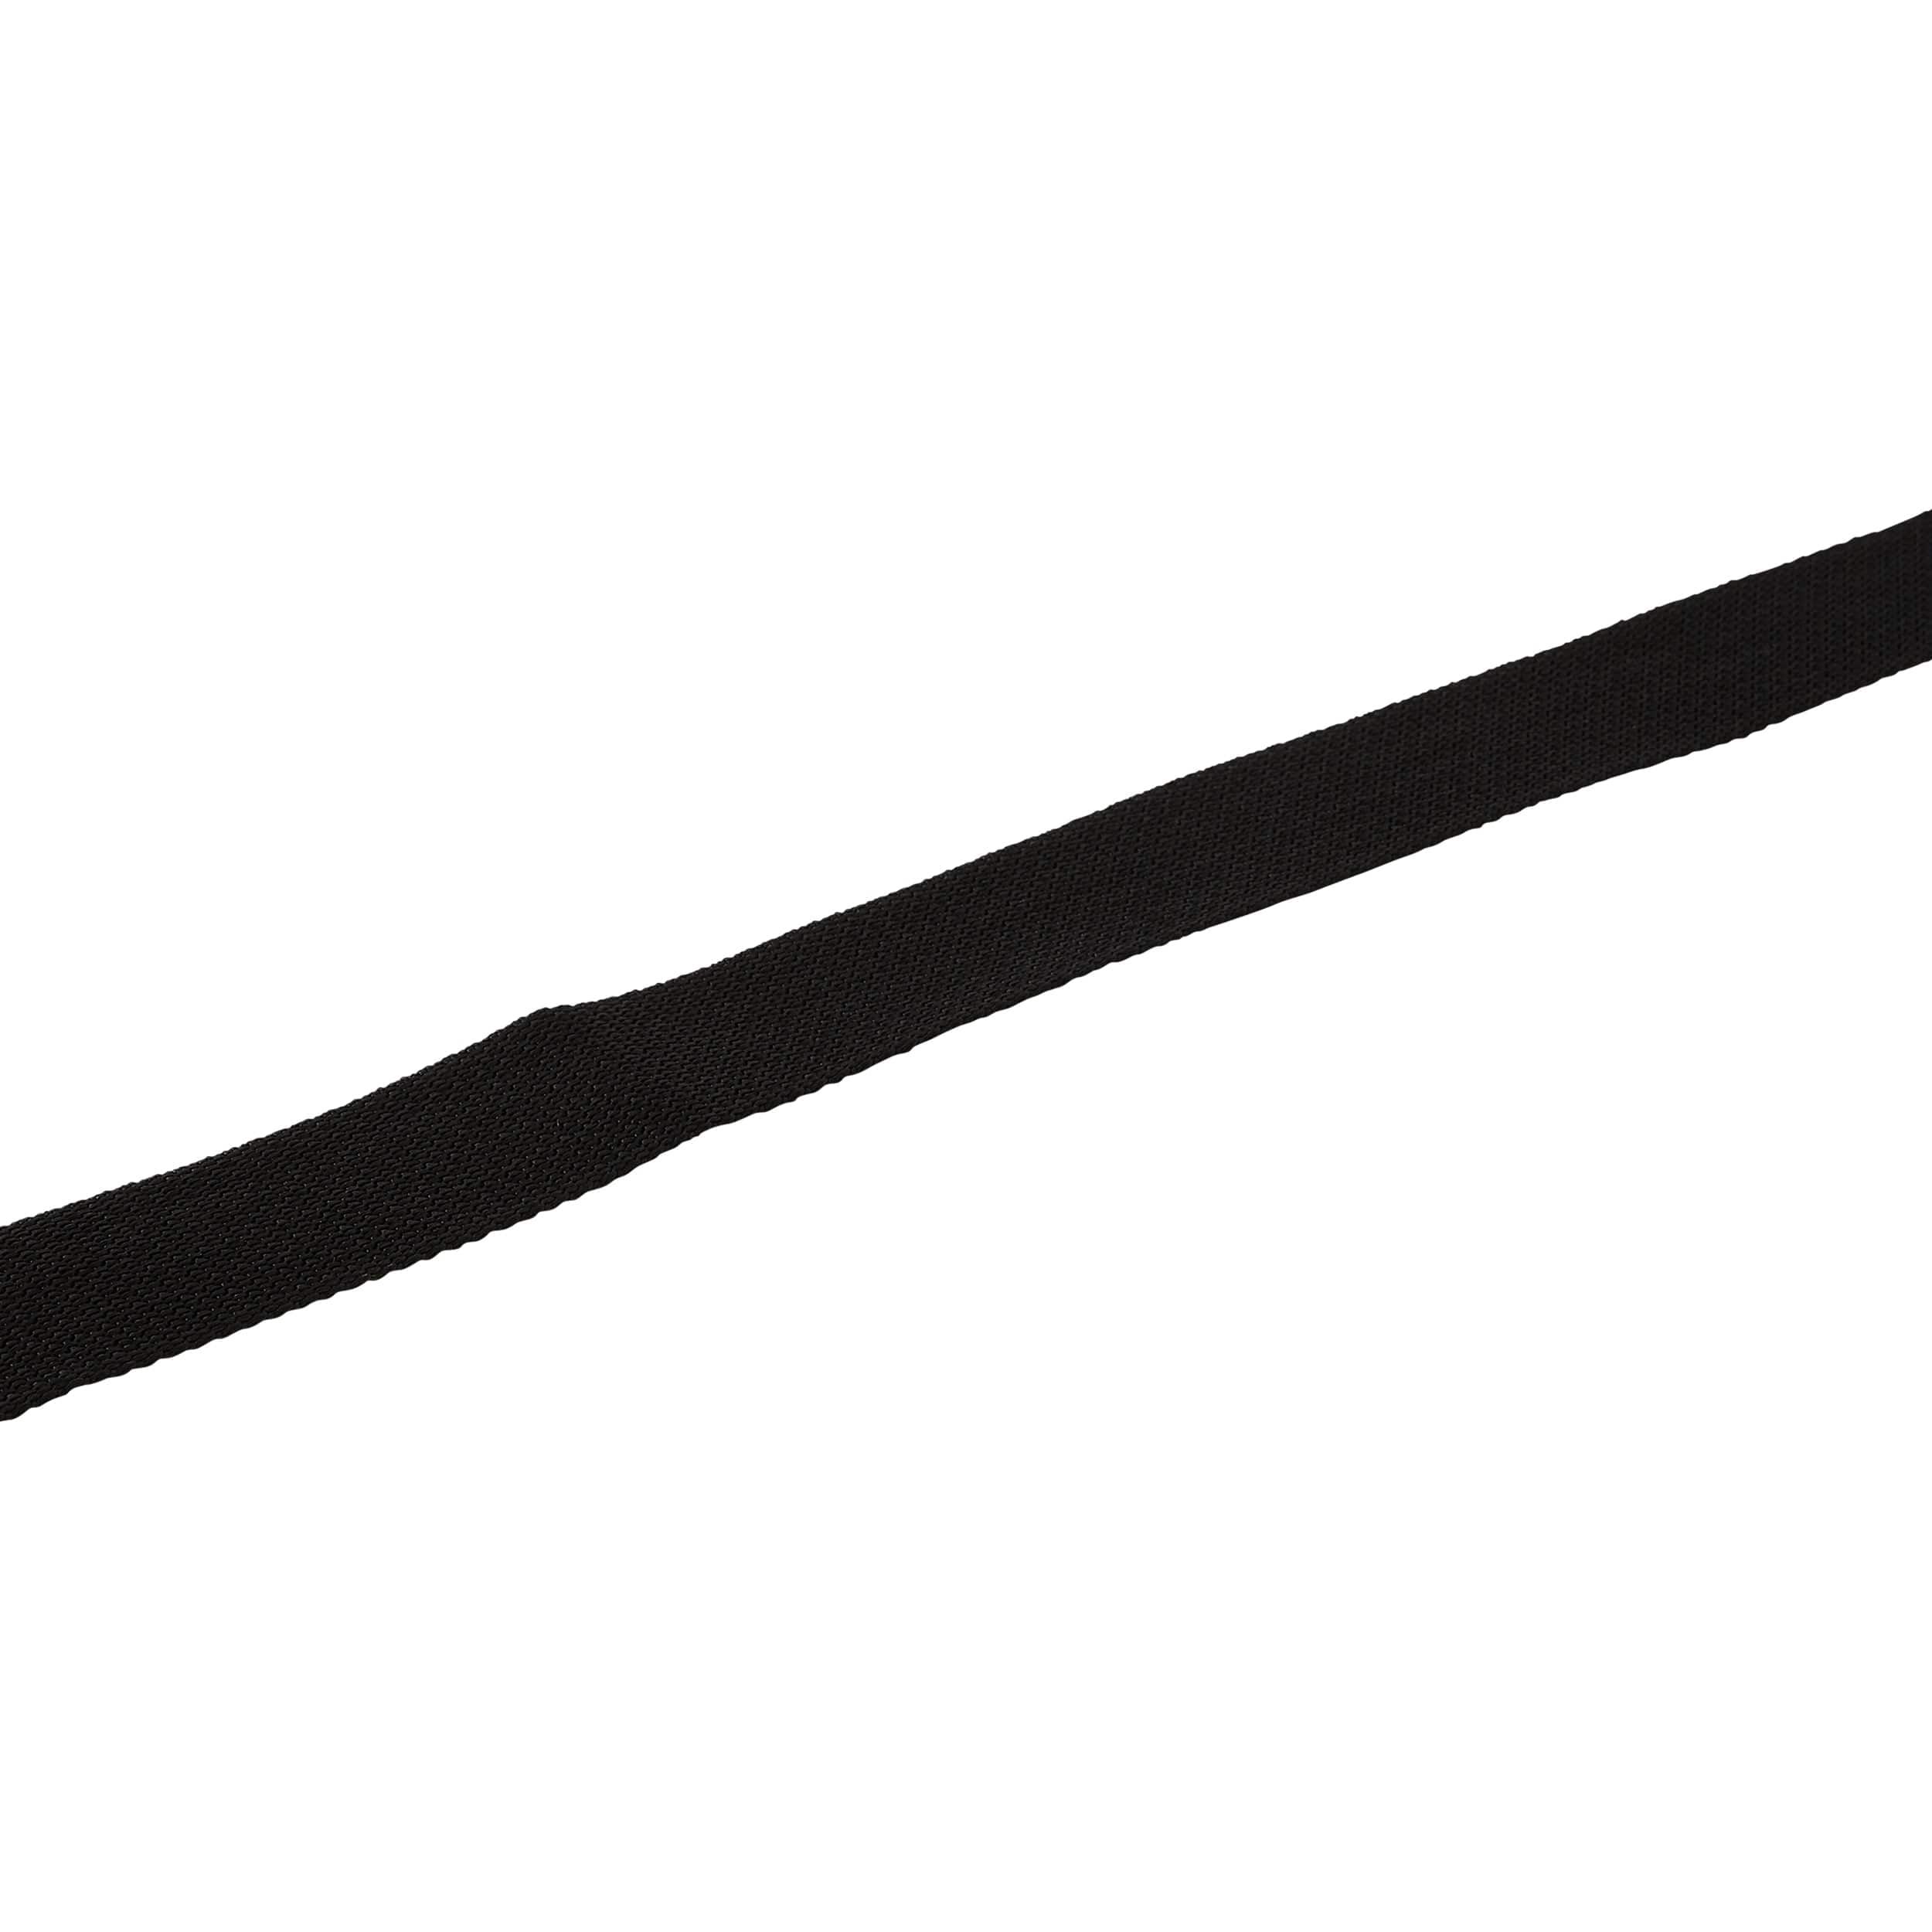 2 x 60 Plastic, Dual Adjustable Grip Strip Shoulder Strap, #NS-60PWR